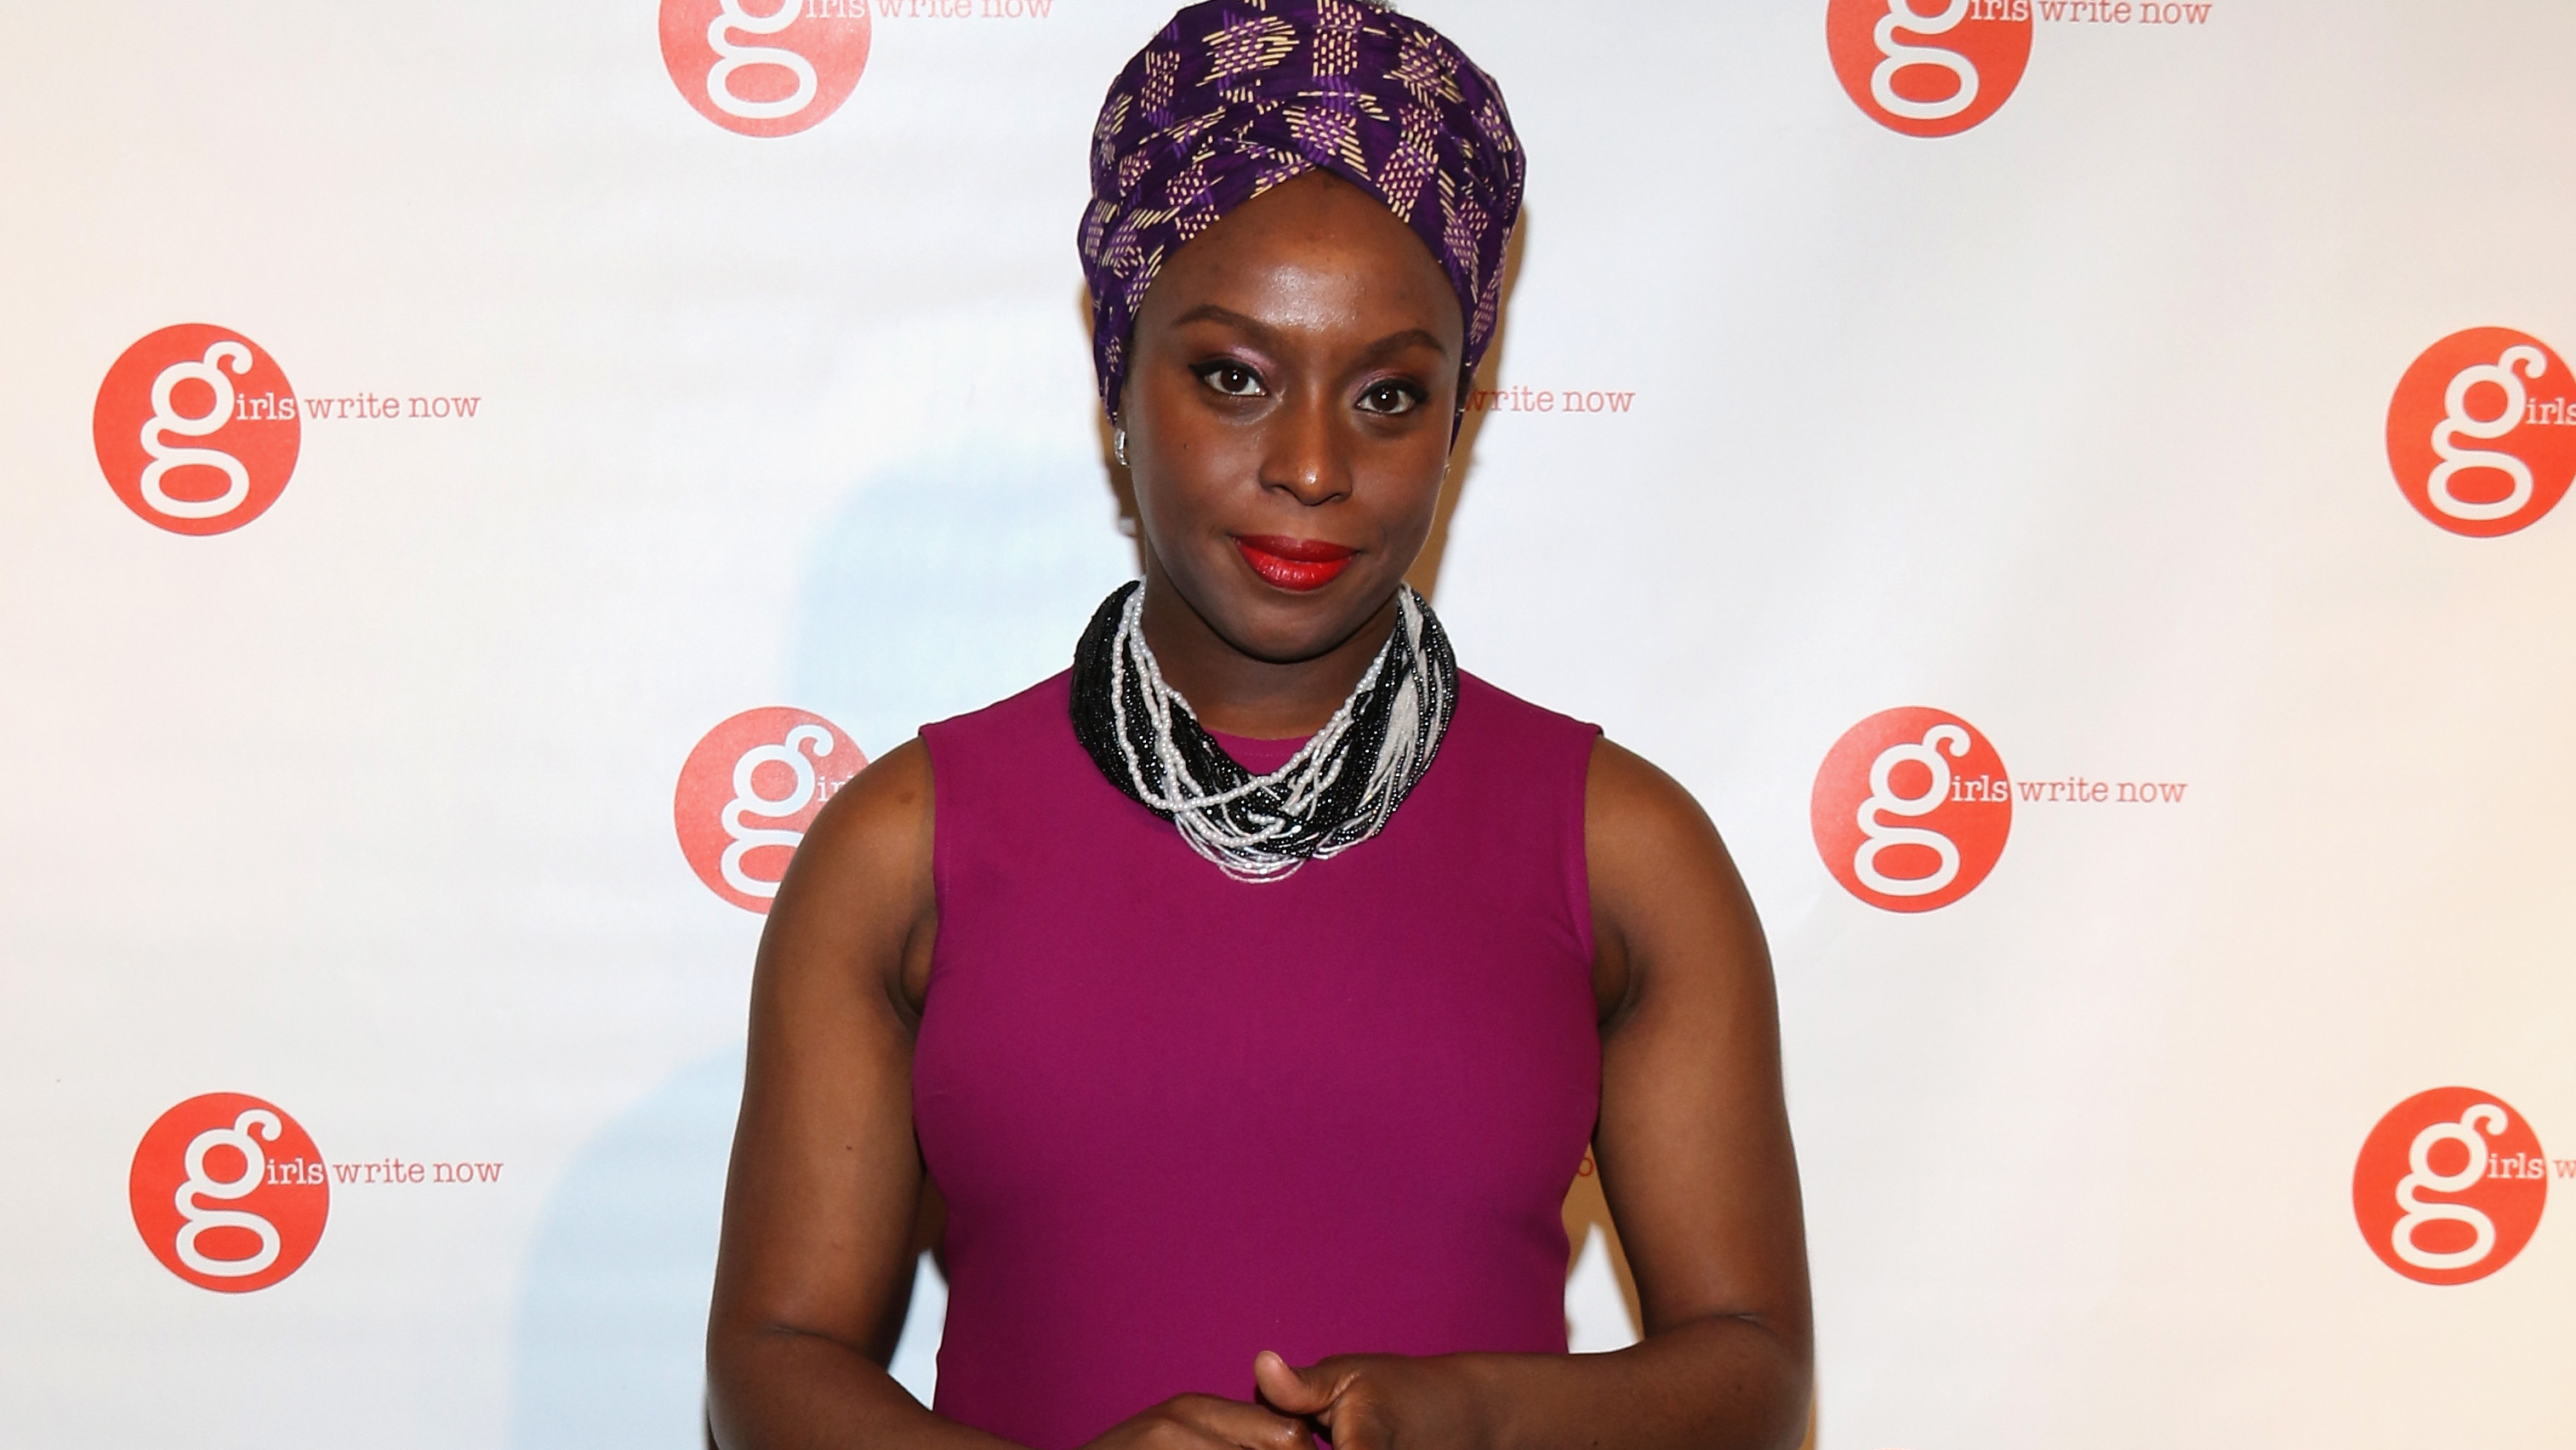 Author Chimamanda Ngozi Adichie attends the Girls Write Now Awards honoring Chimamanda Ngozi Adichie, Pamela Paul and Juju Chang at Tribeca 360 on May 19, 2015 in New York City. (Janette Pellegrini/Getty Images for Girls Write Now)